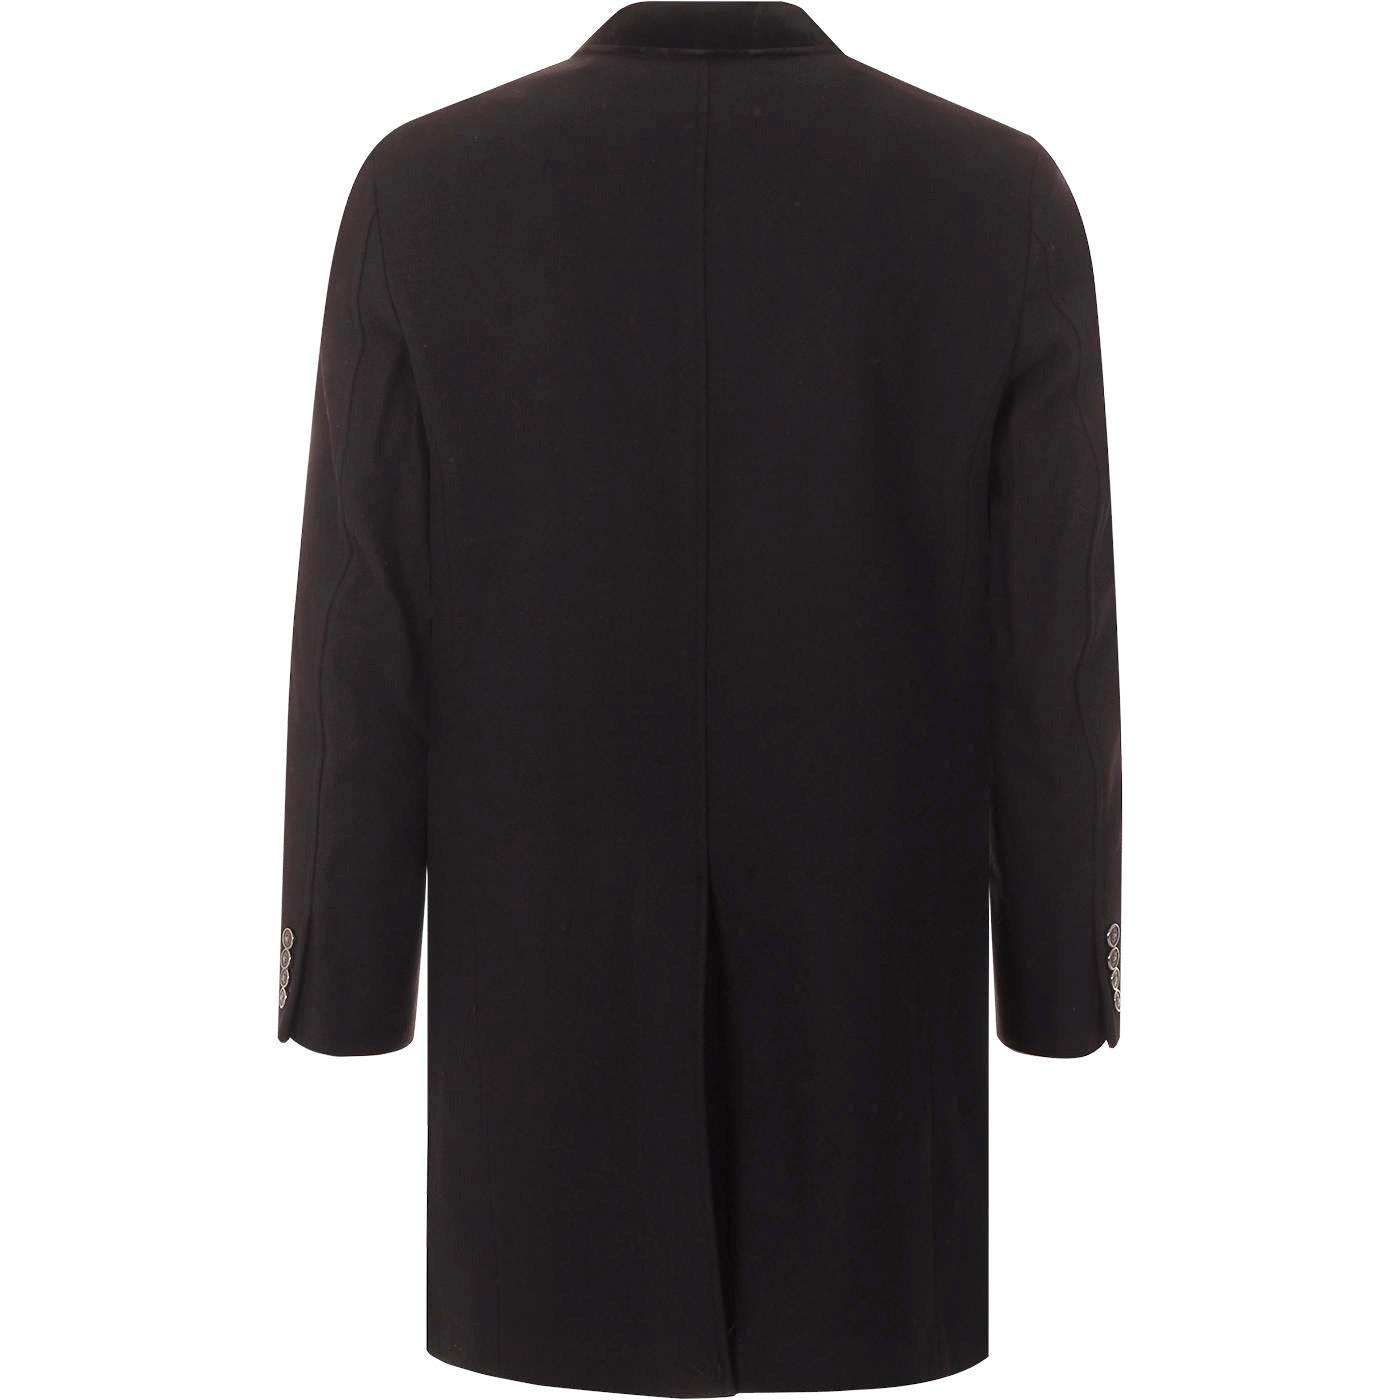 GABICCI VINTAGE Men's Retro Mod Wool Overcoat in Black